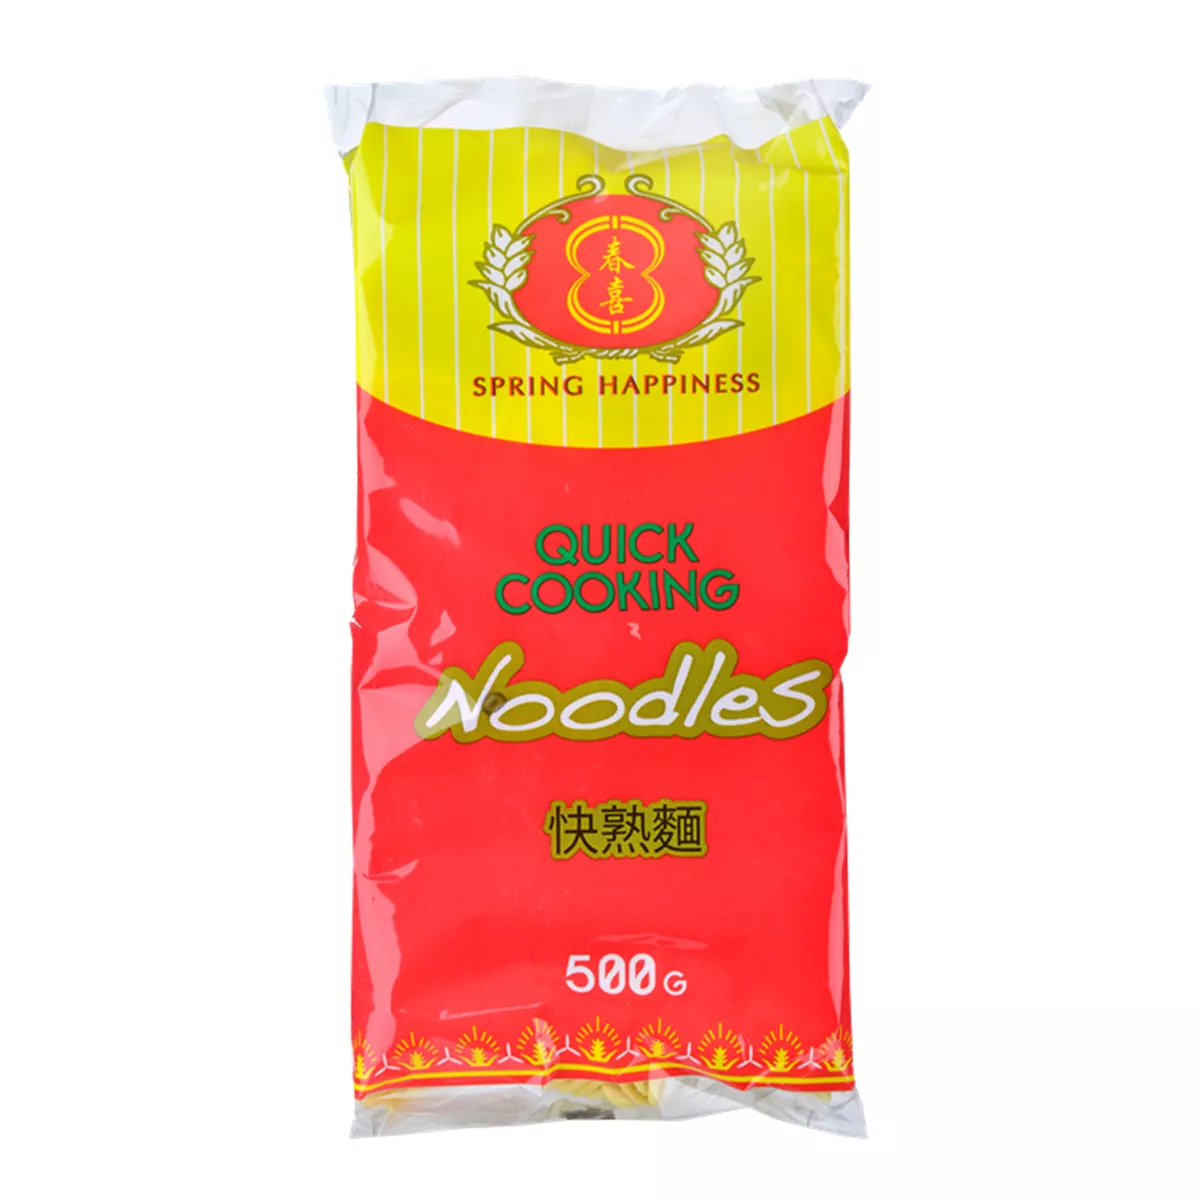 Taitei din grau (ramen noodles) SH 500g, [],asianfood.ro